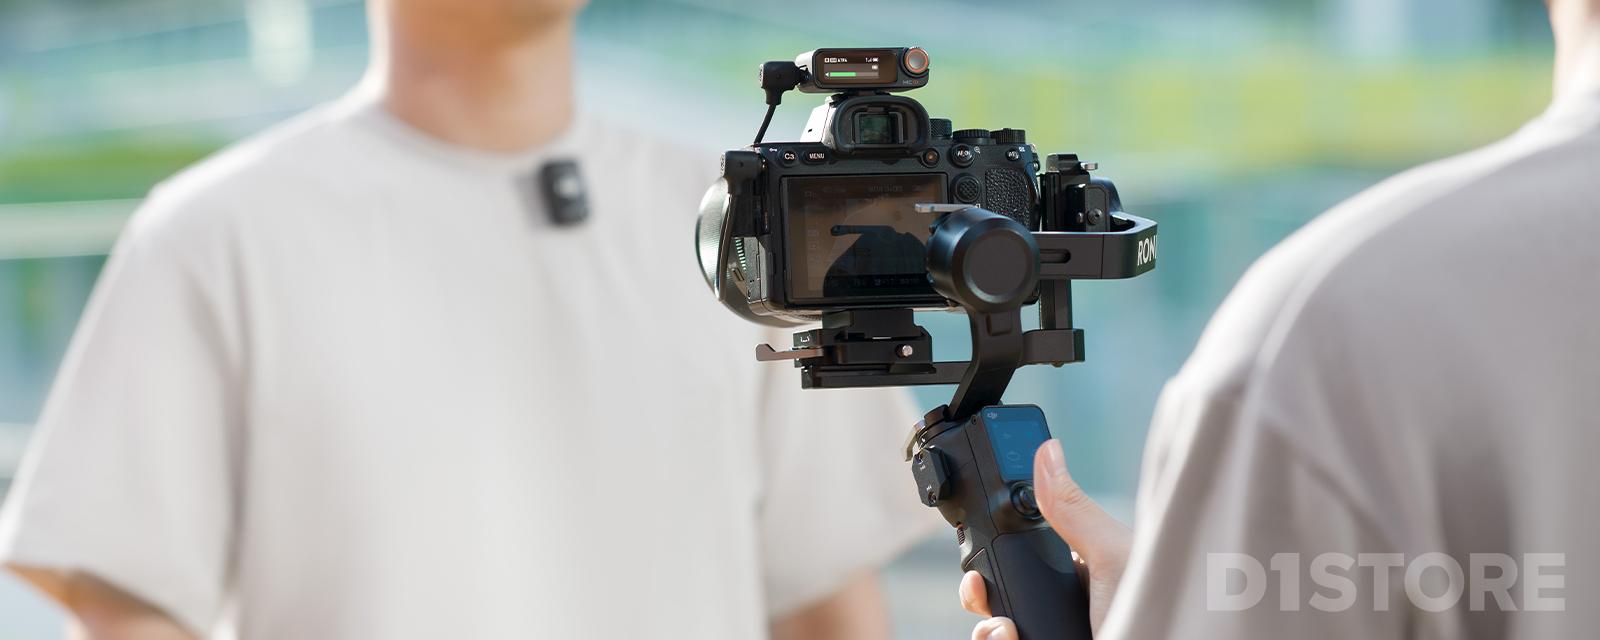 Man filming with camera mounted with DJI Ronin gimbal and DJI Mic 2